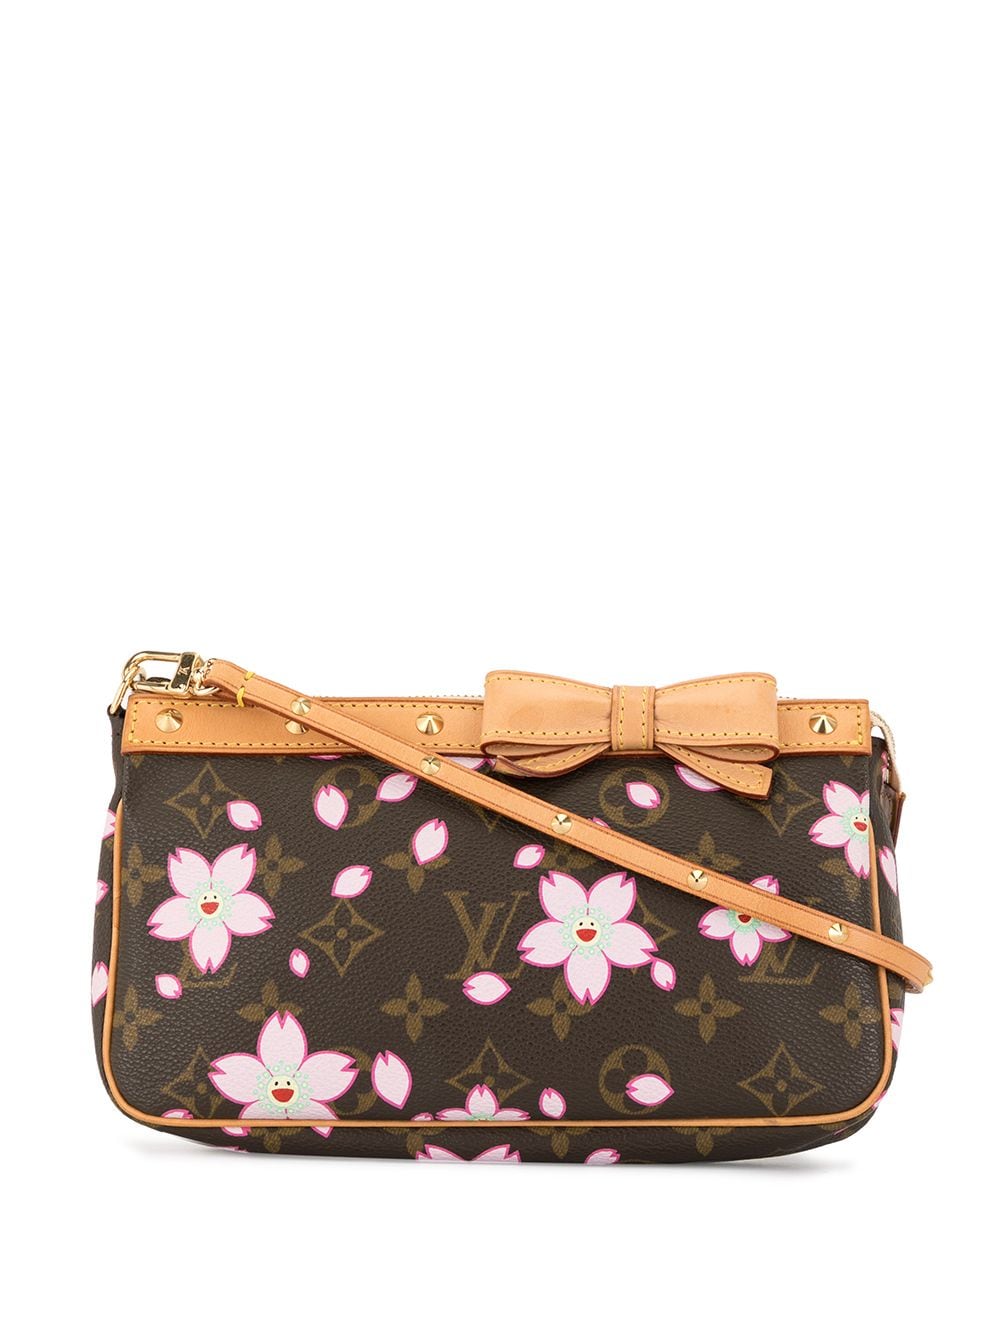 Louis Vuitton X Takashi Murakami Cherry Blossom Monogram Shoulder Bag In Brown, Pink | ModeSens